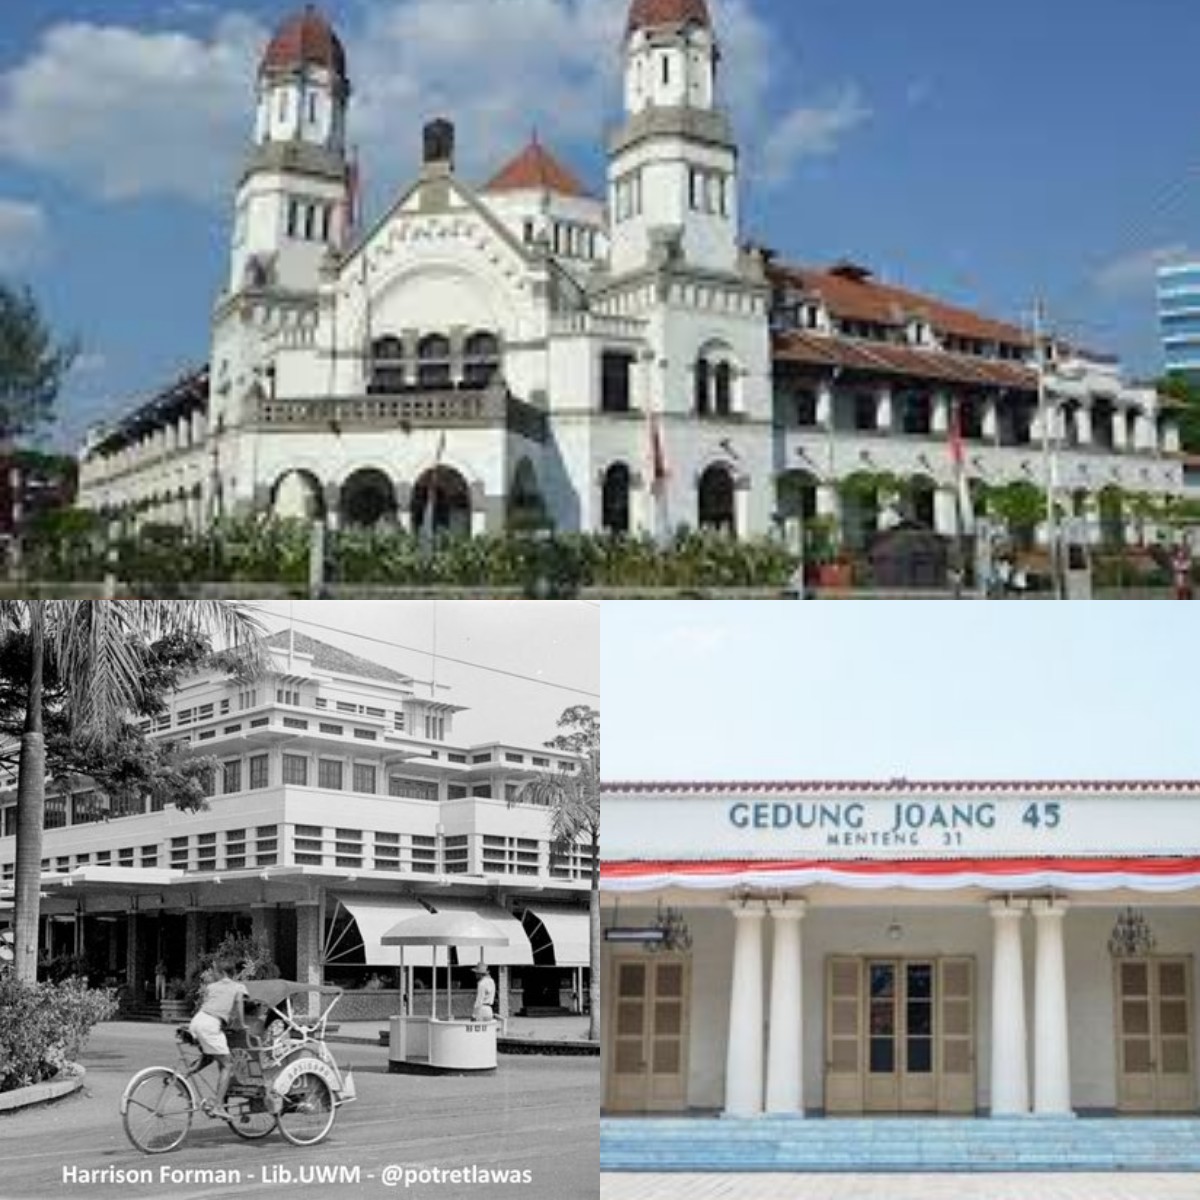 Menyimpan Sejarah Kemerdekaan Hingga Cerita Mistis! Inilah 6 Deretan Bangunan Tua yang Ada di Indonesia 